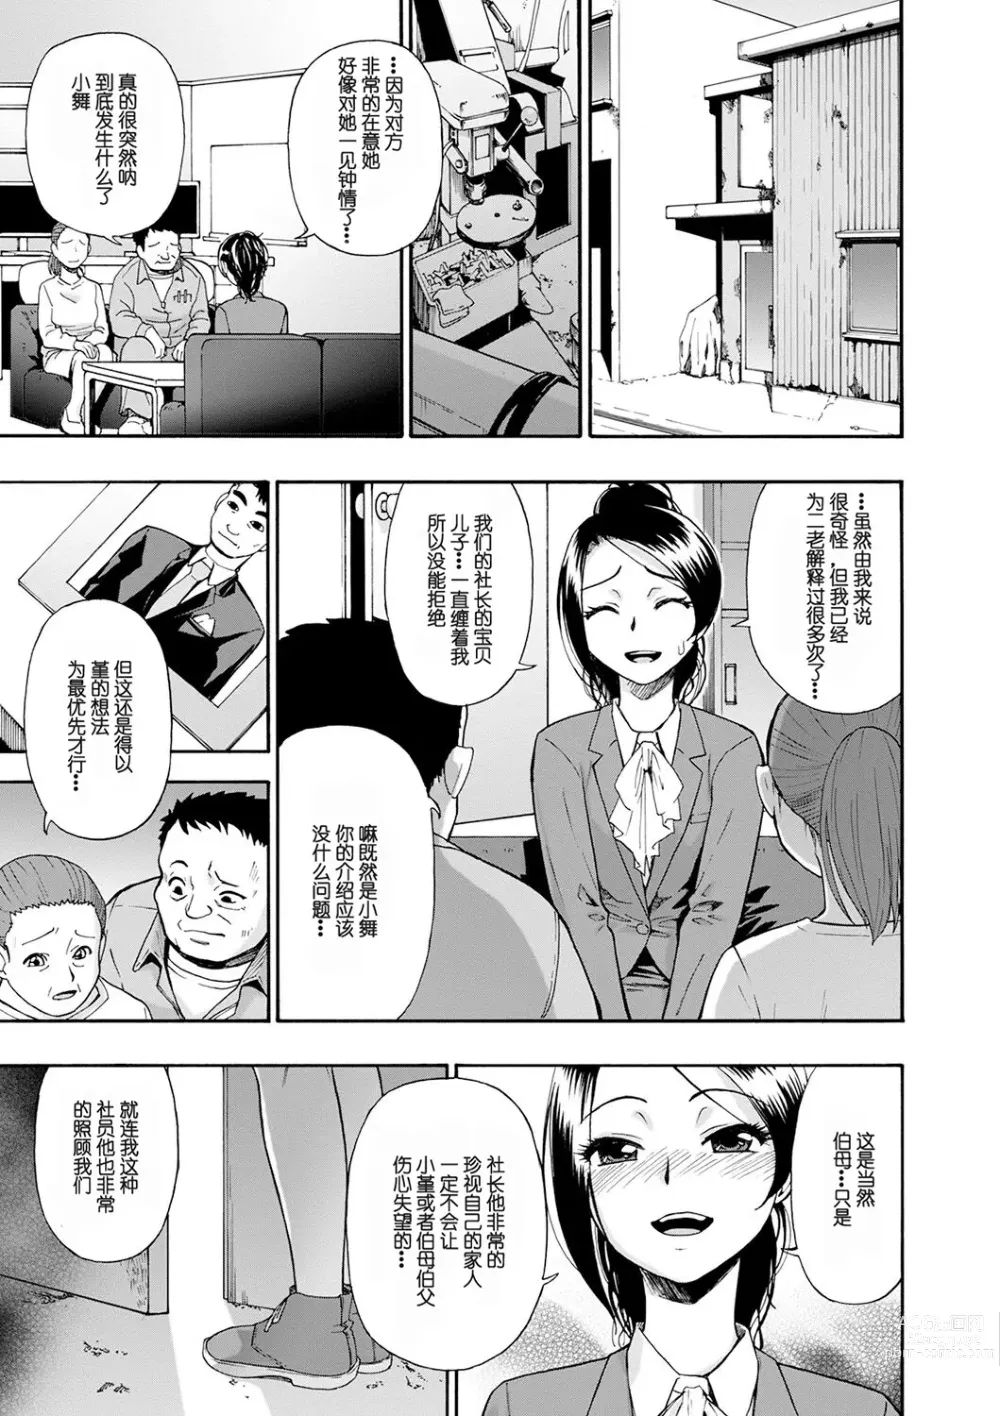 Page 7 of manga Chikushou Bara - The Chikushou Bara